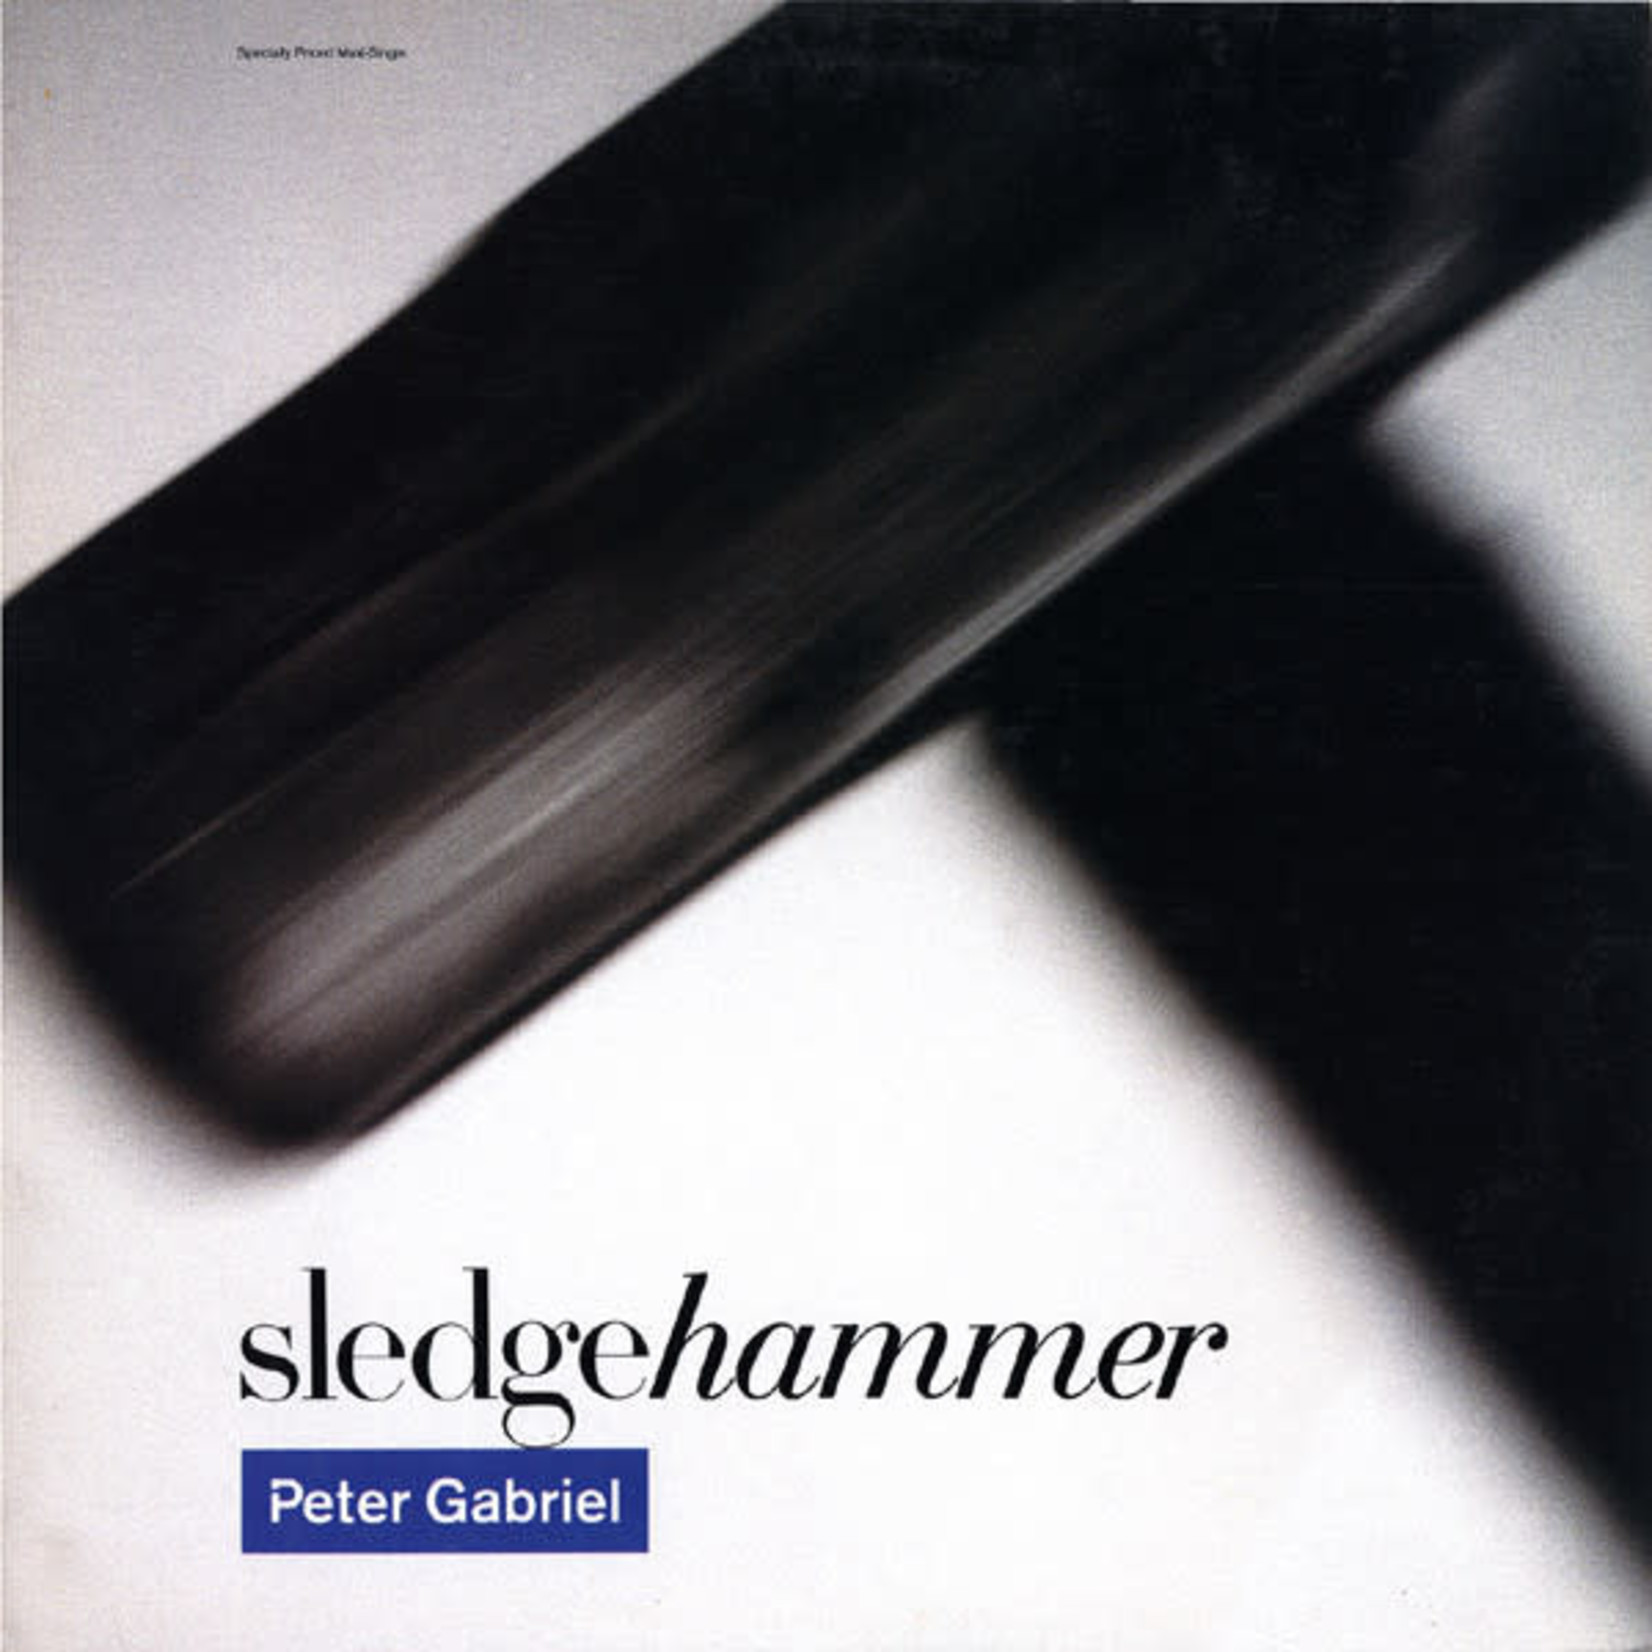 [Vintage] Peter Gabriel - Sledgehammer (12")